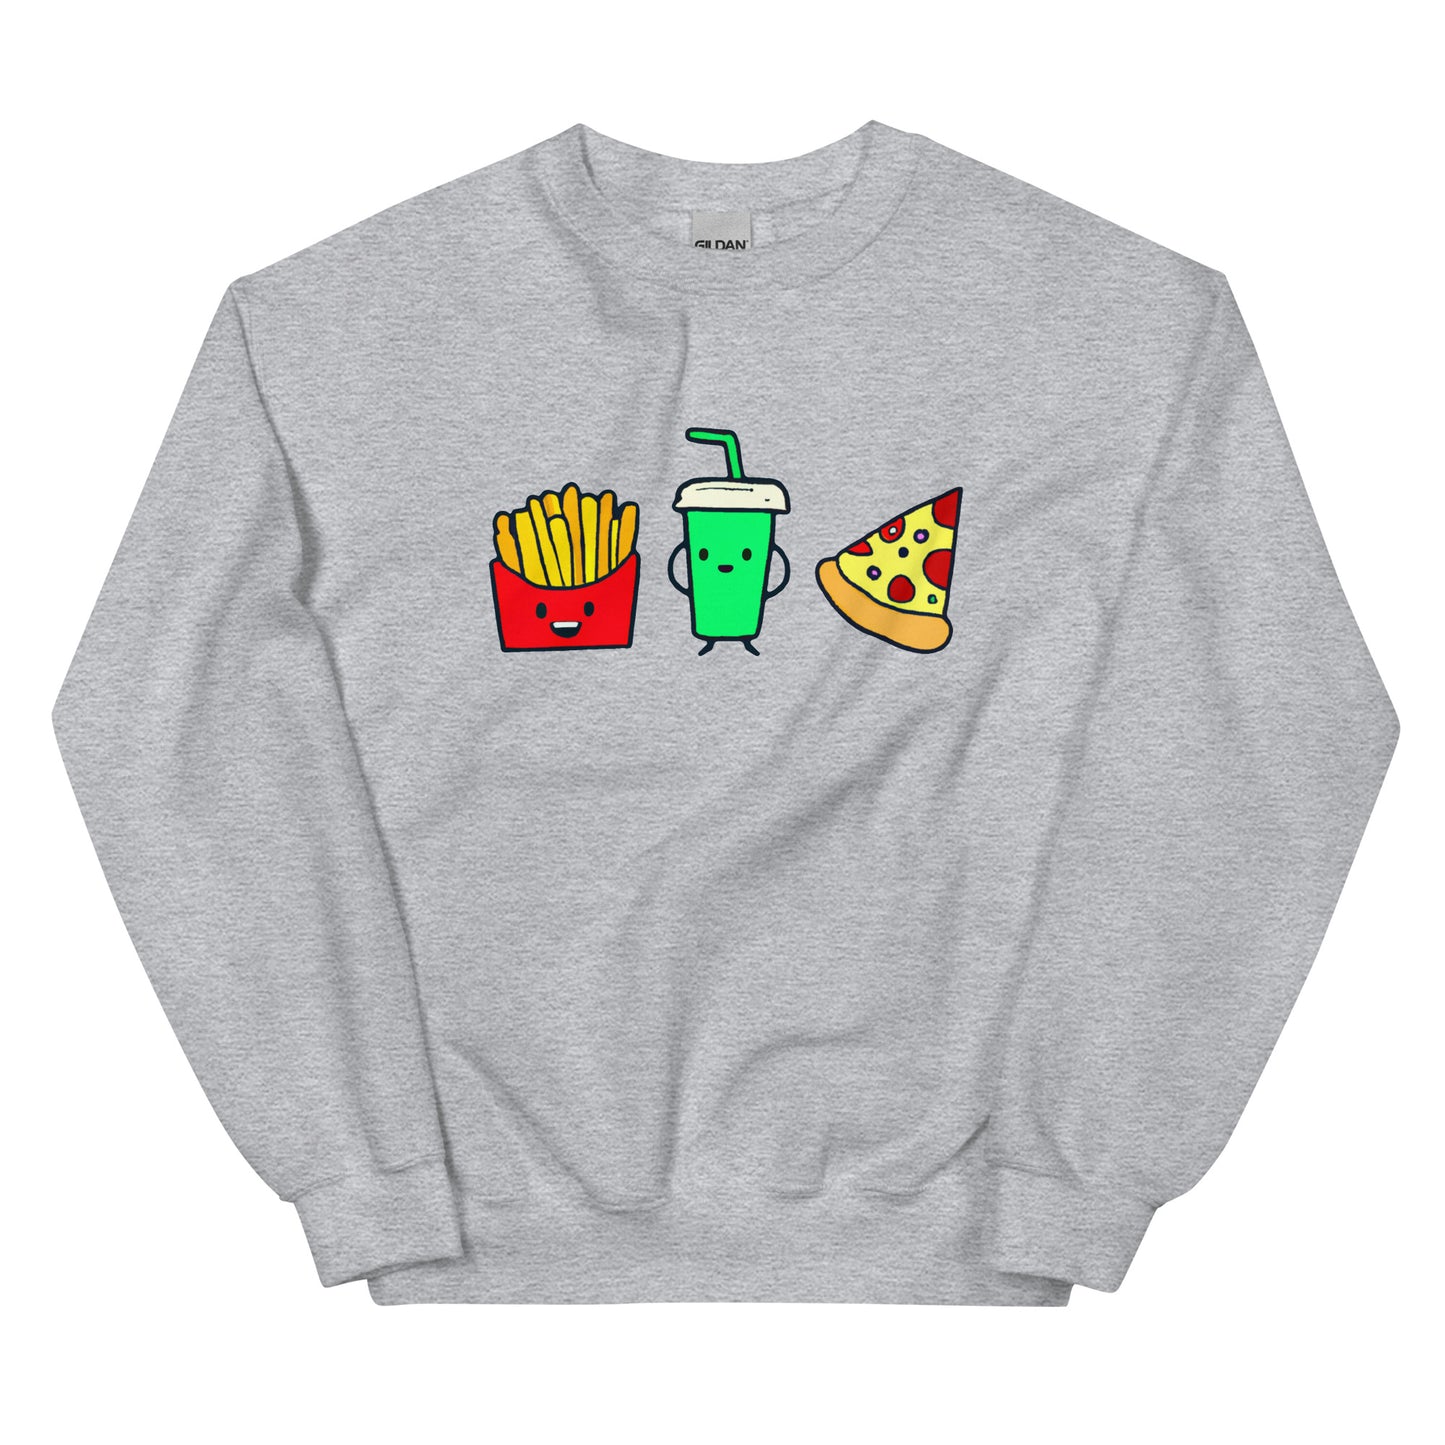 French Fries, Soda & Pizza Unisex Sweatshirt